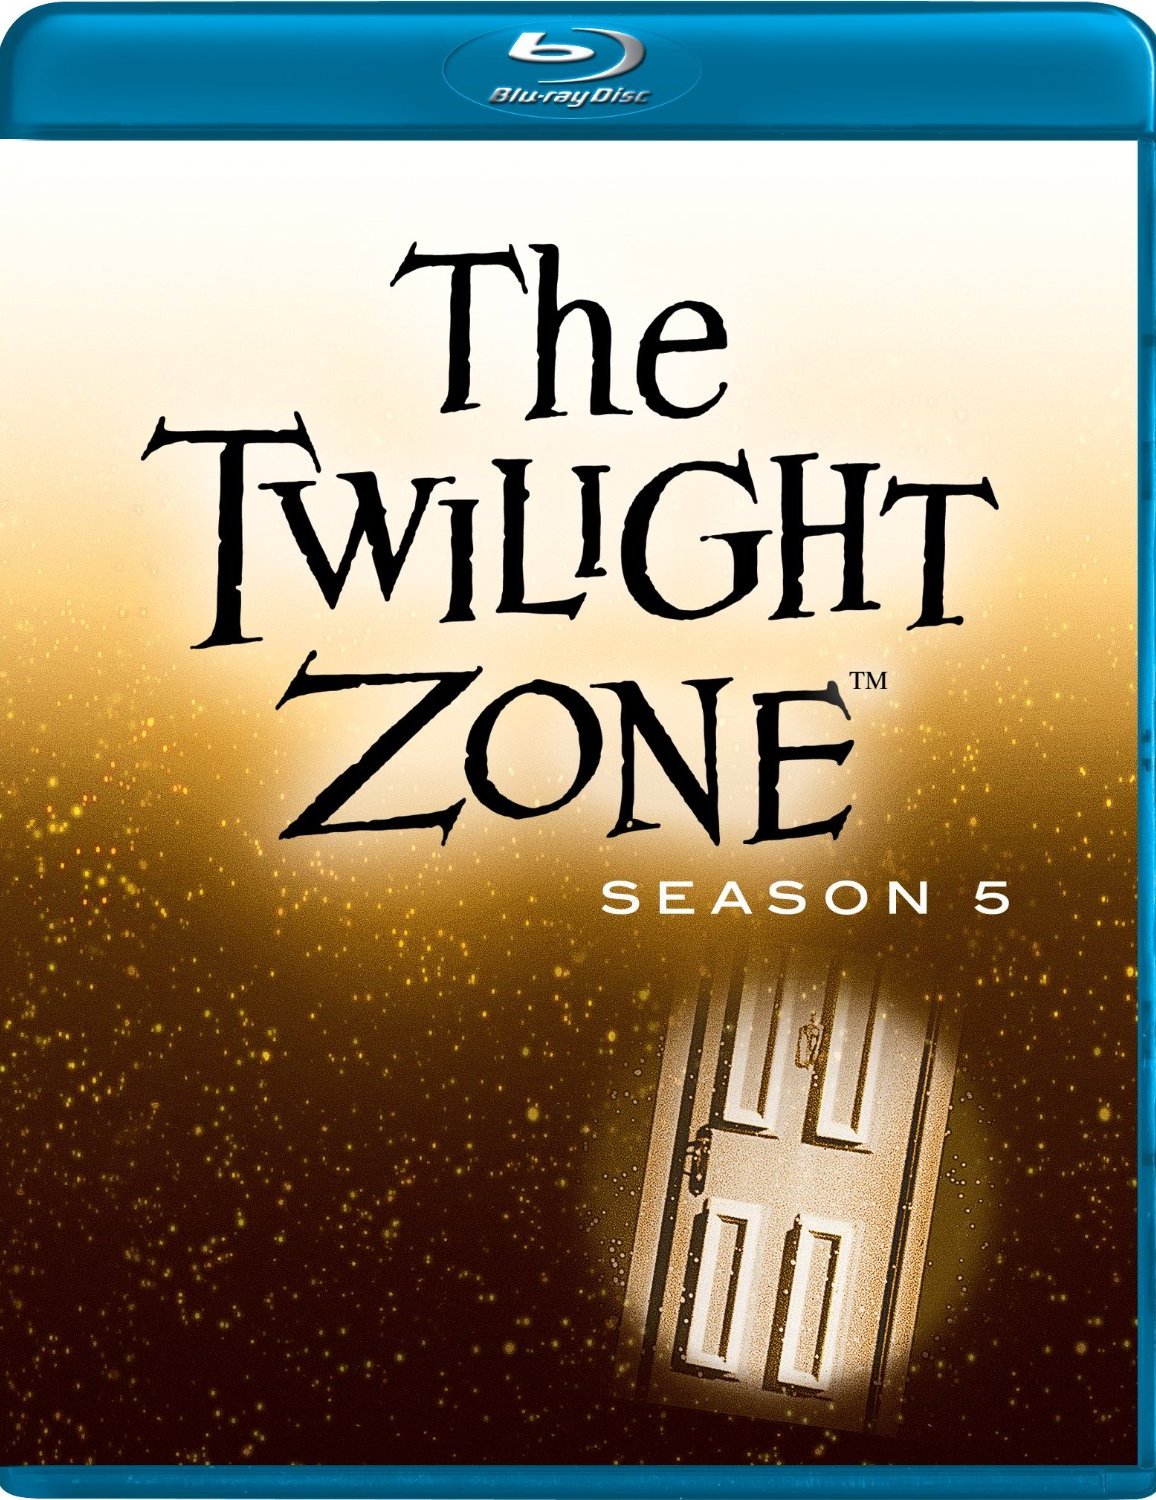 Twilight Zone Season 5 movie